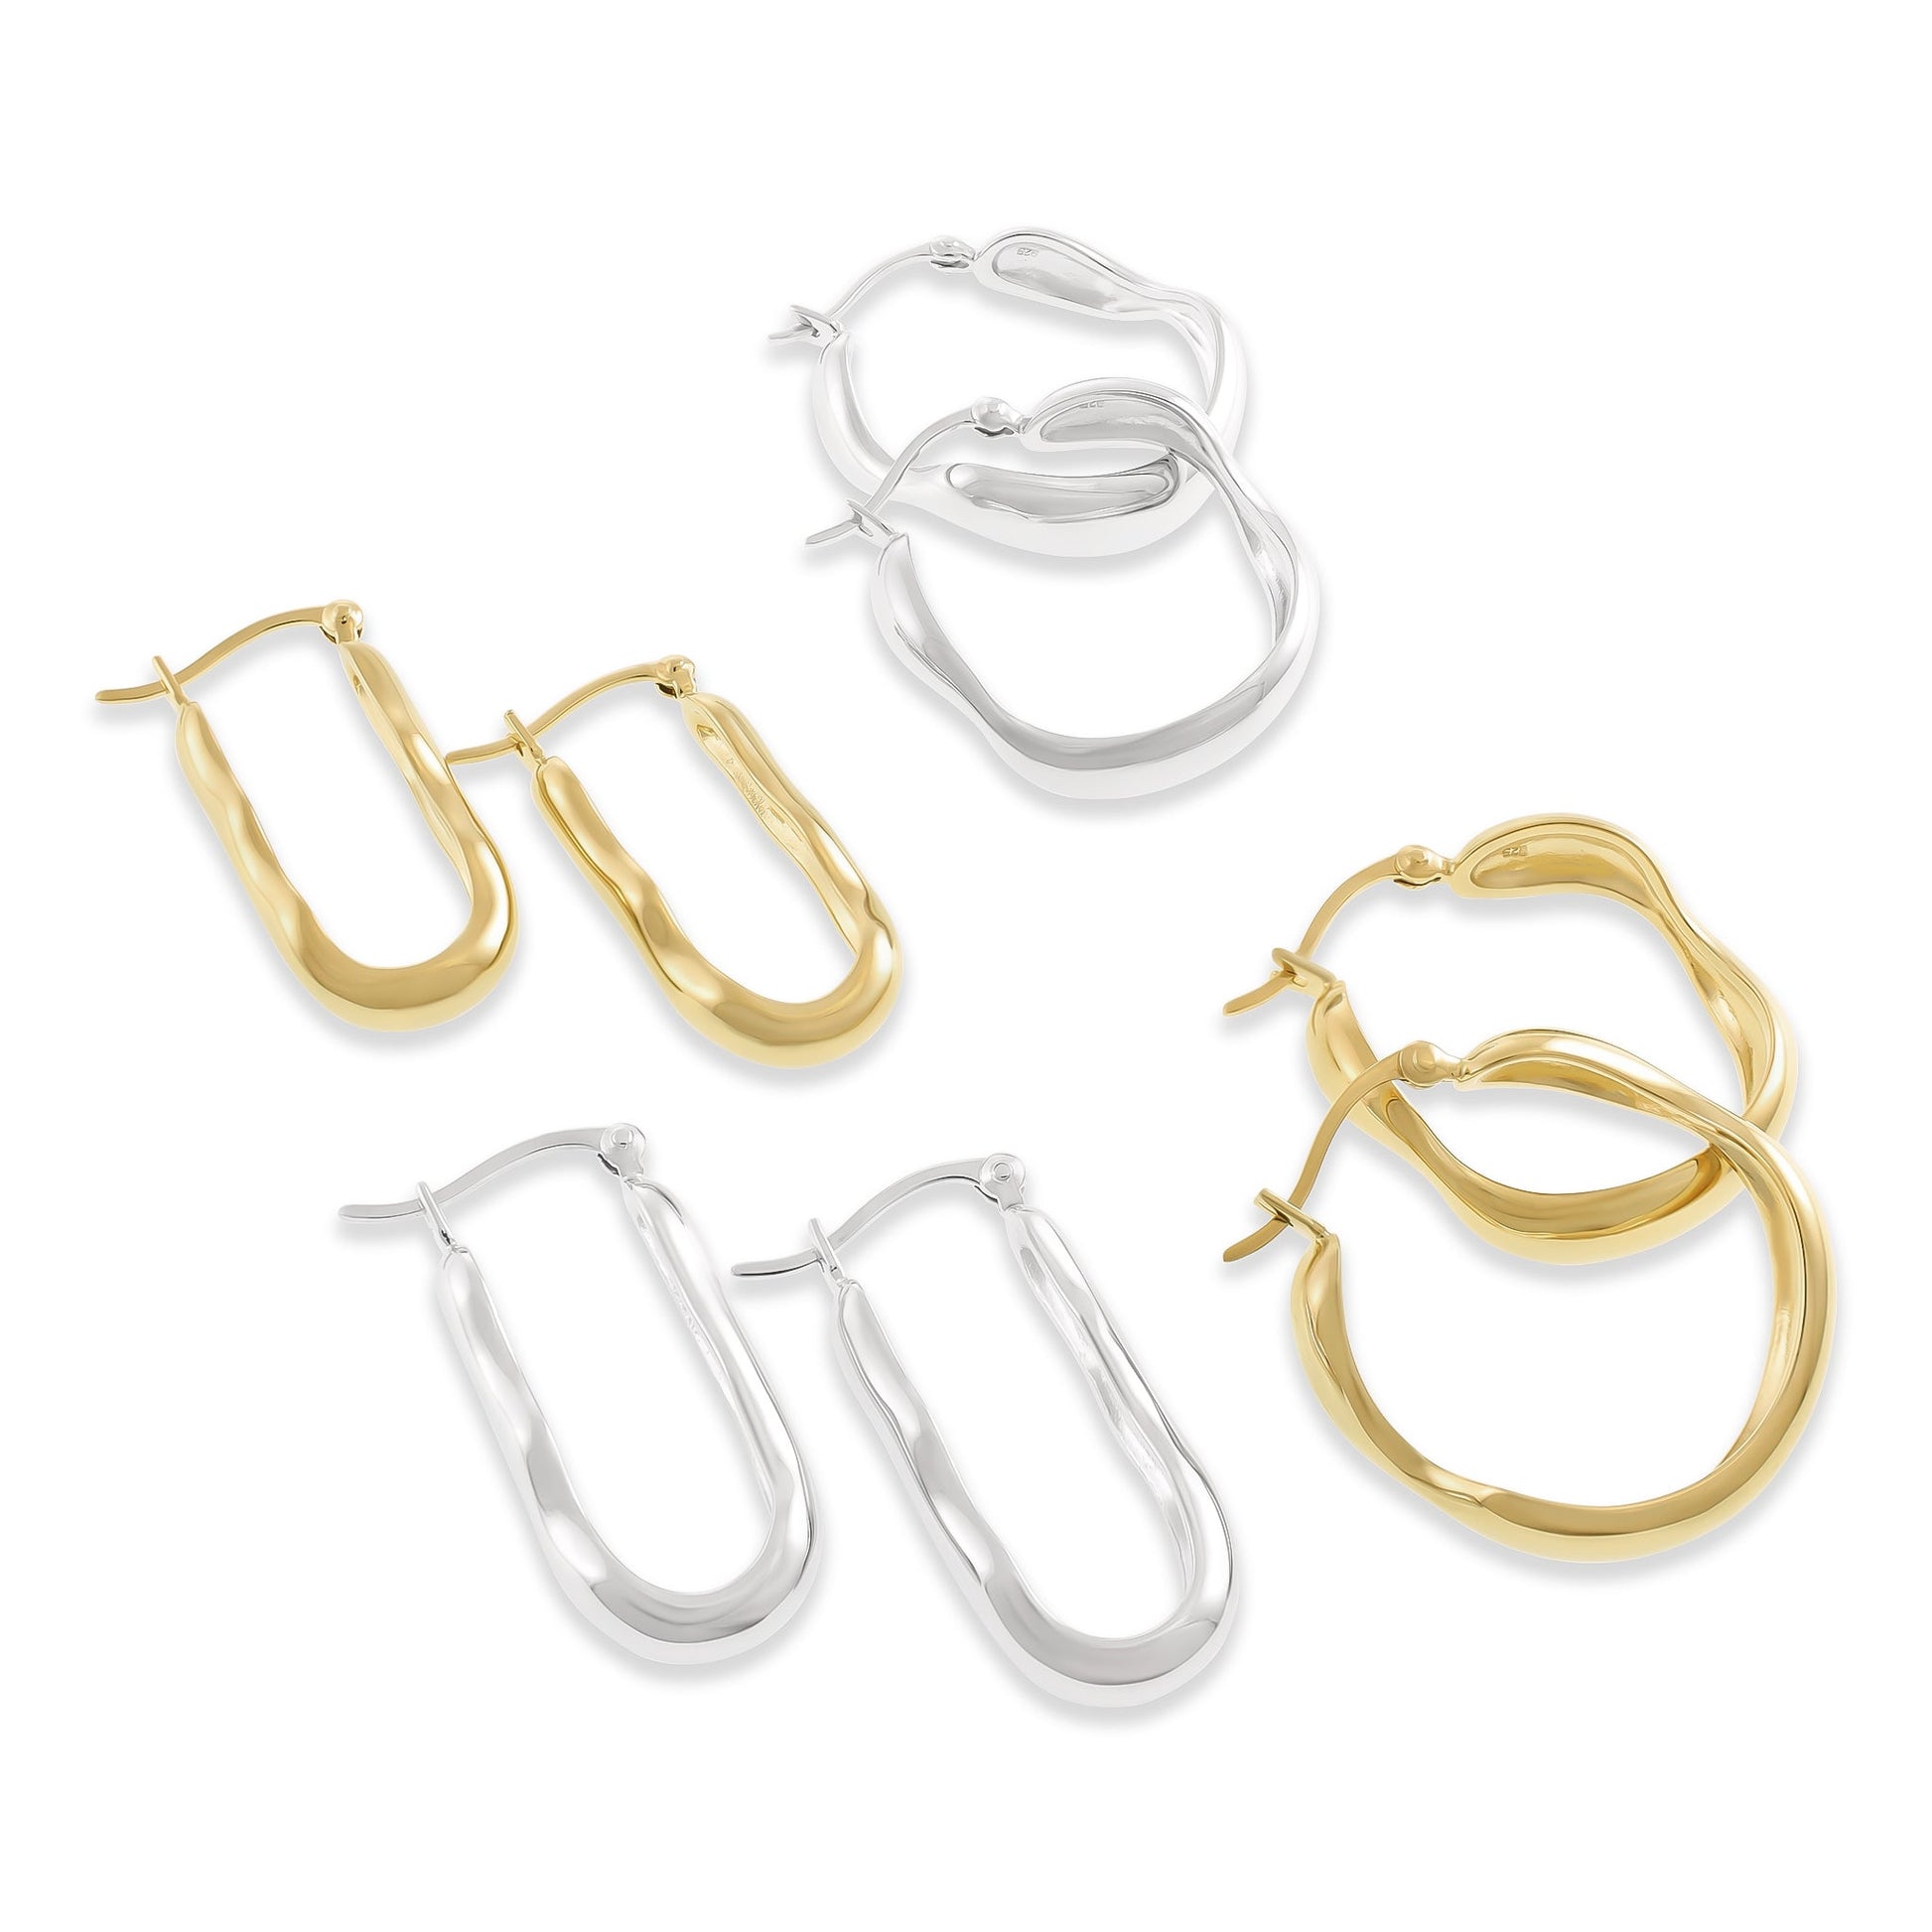 14k gold plated 1 micron wavy hoop earrings PER1002 - FJewellery